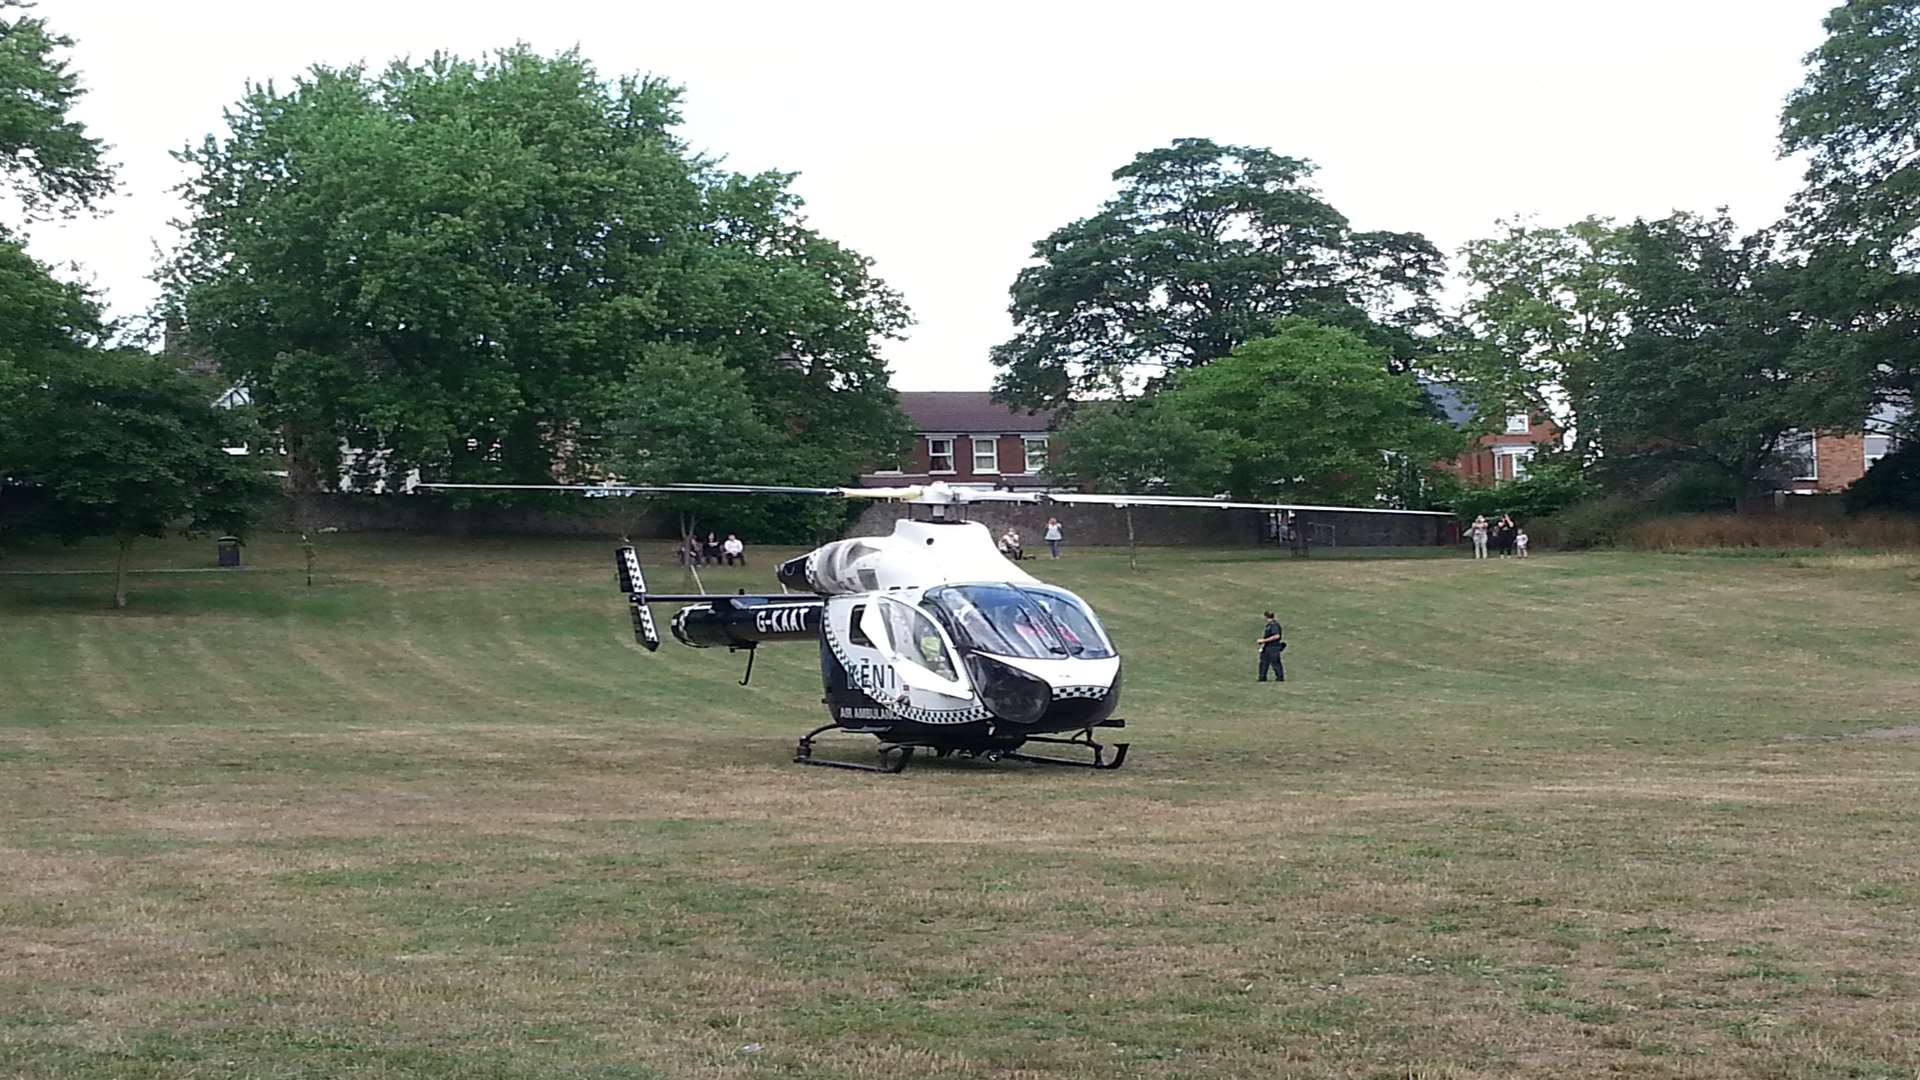 The air ambulance landed in Cornwallis Park